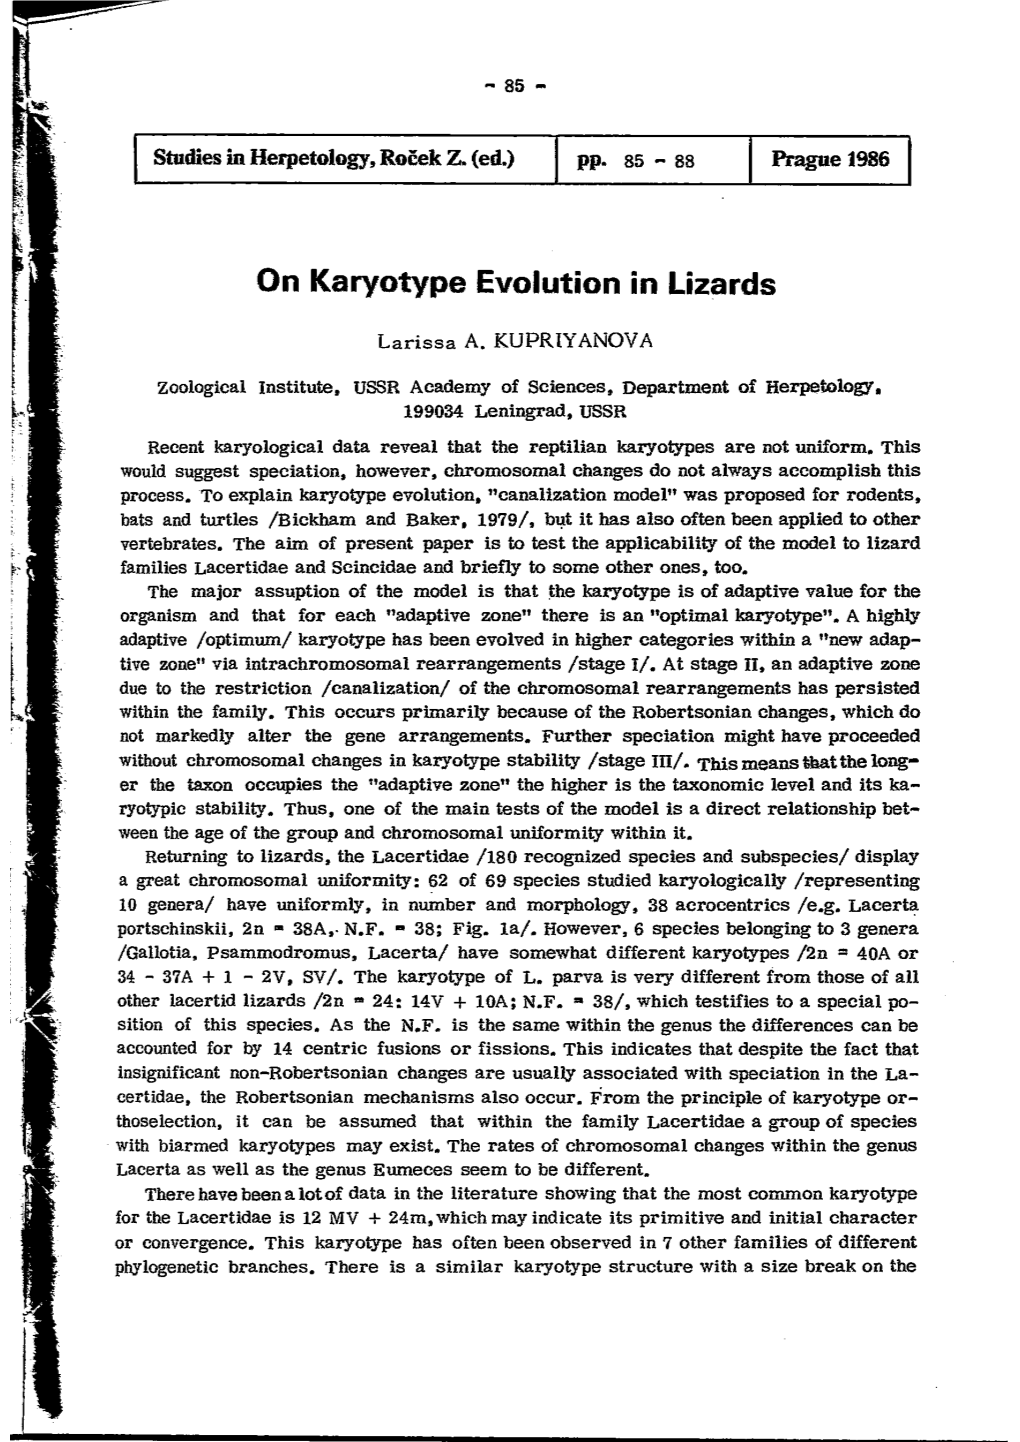 On Karyotype Evolution in Lizards